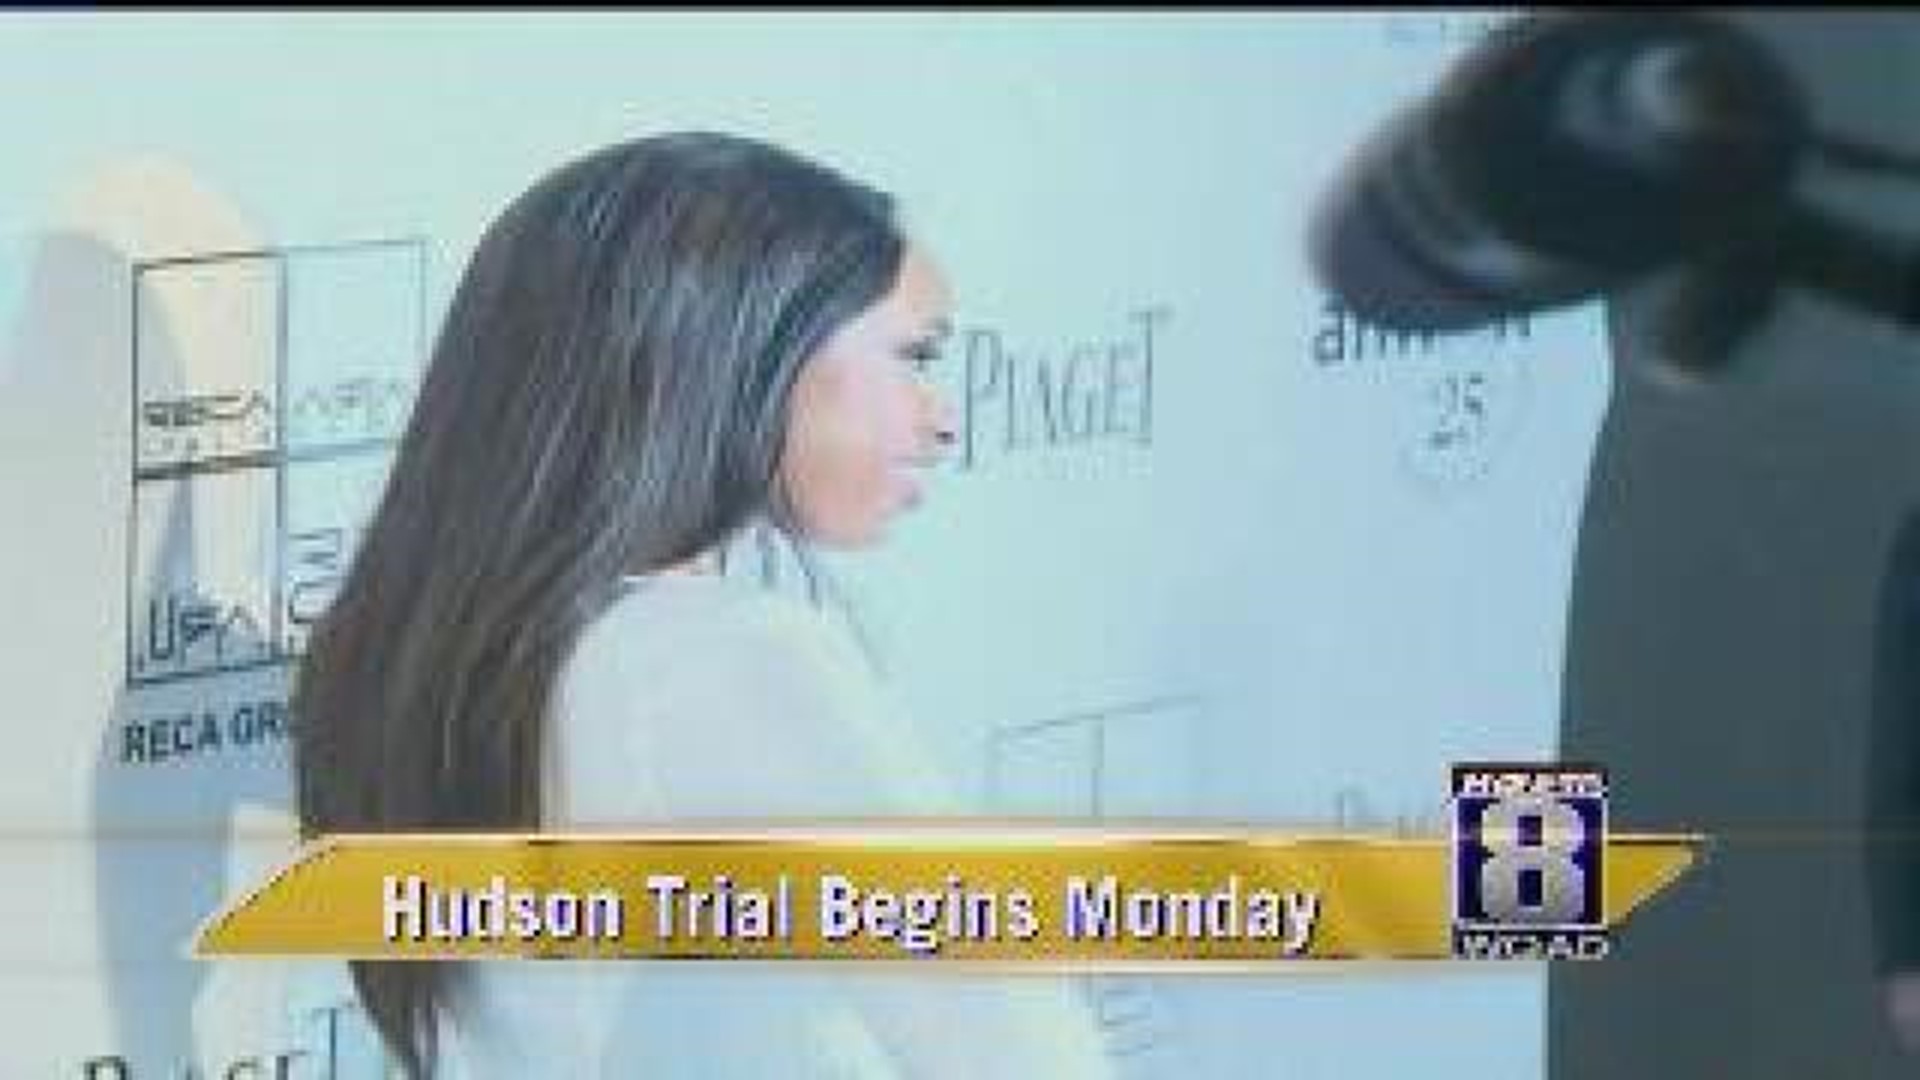 Hudson Trial begins Monday